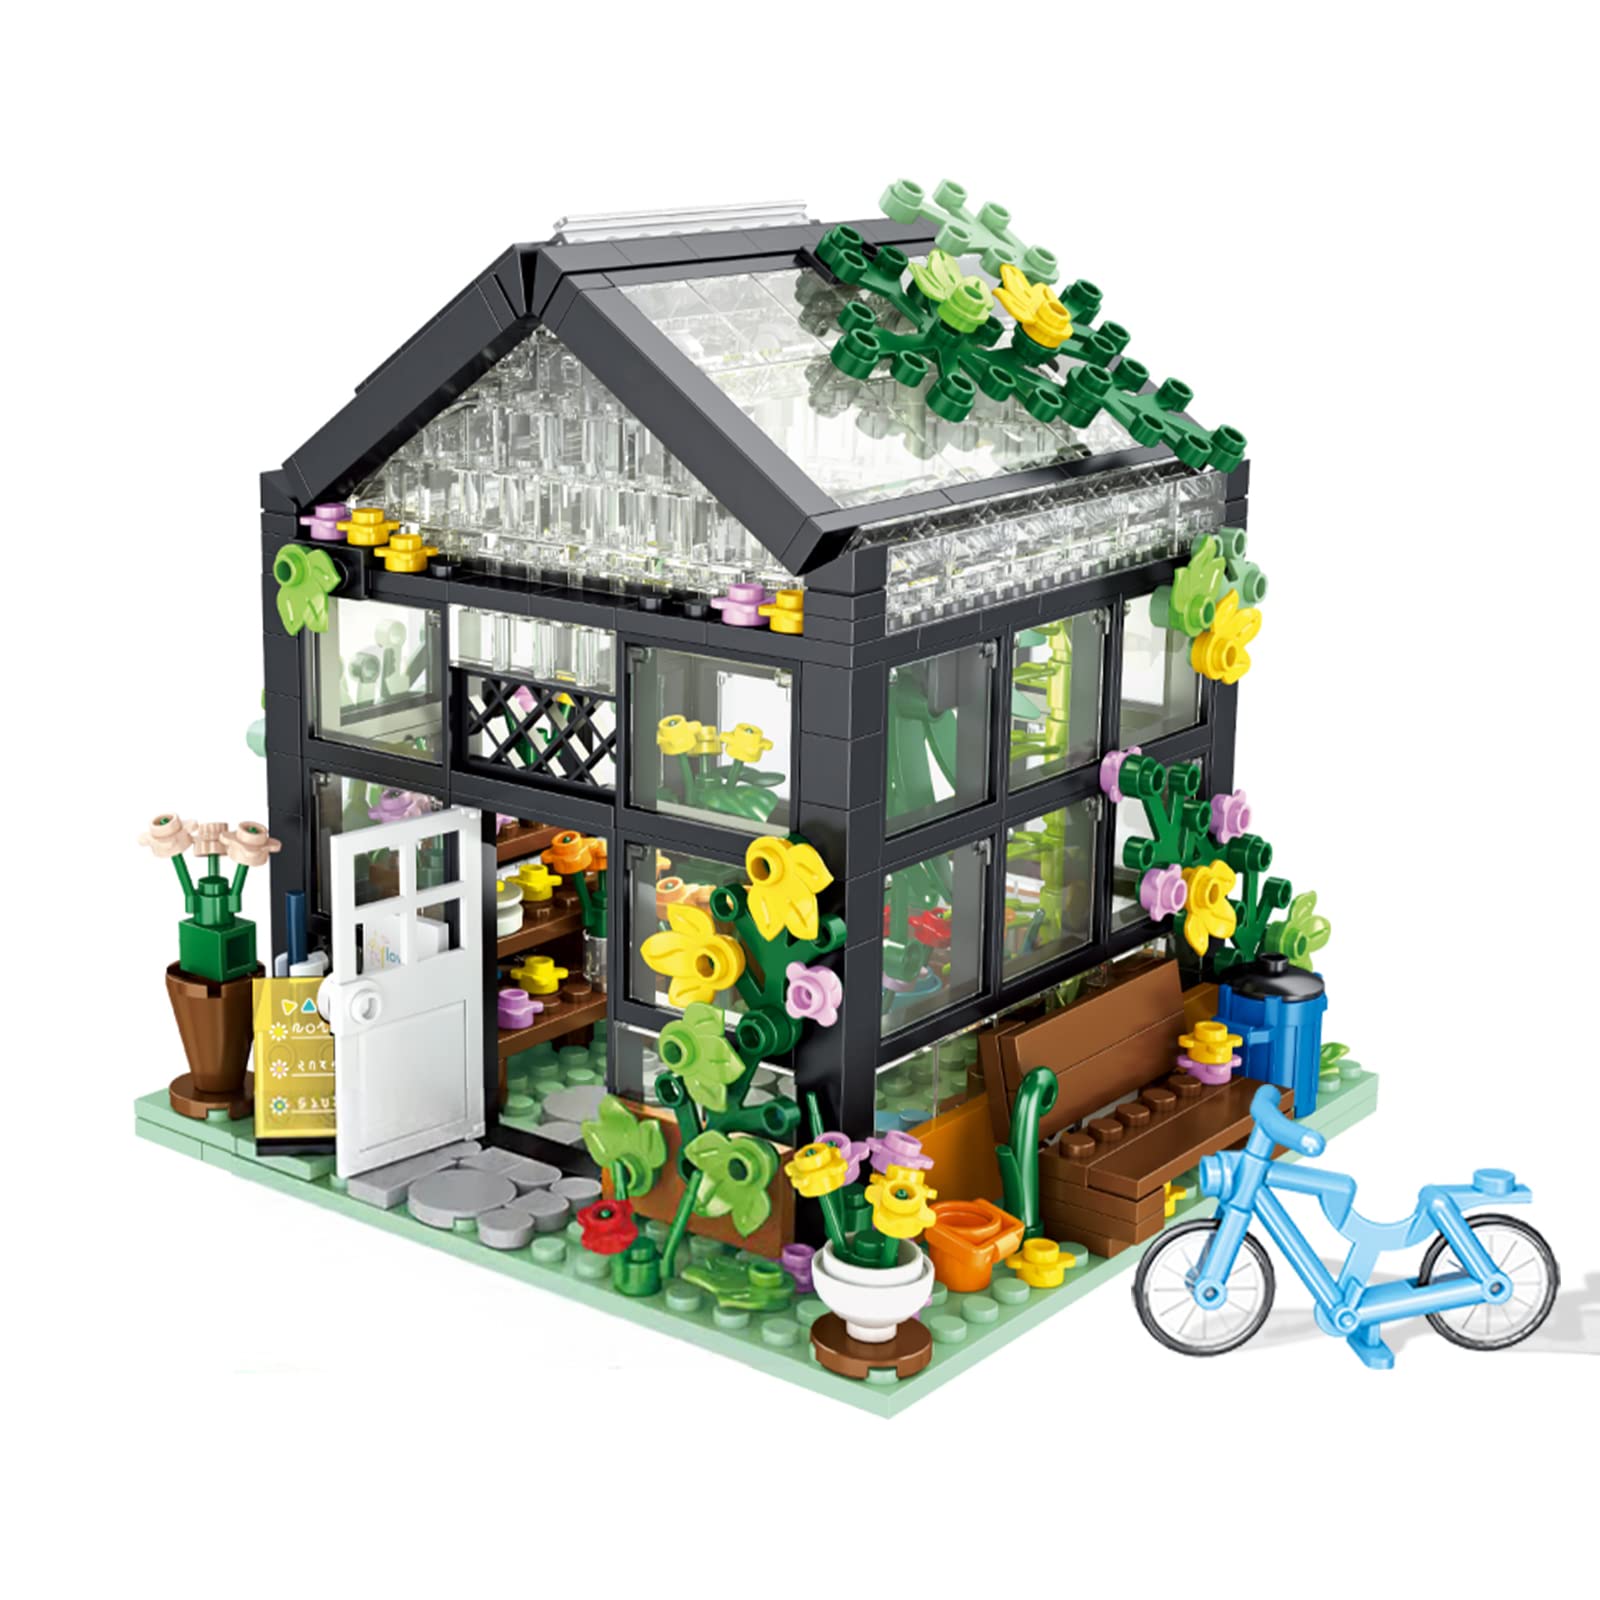  LEGO Rose : Toys & Games